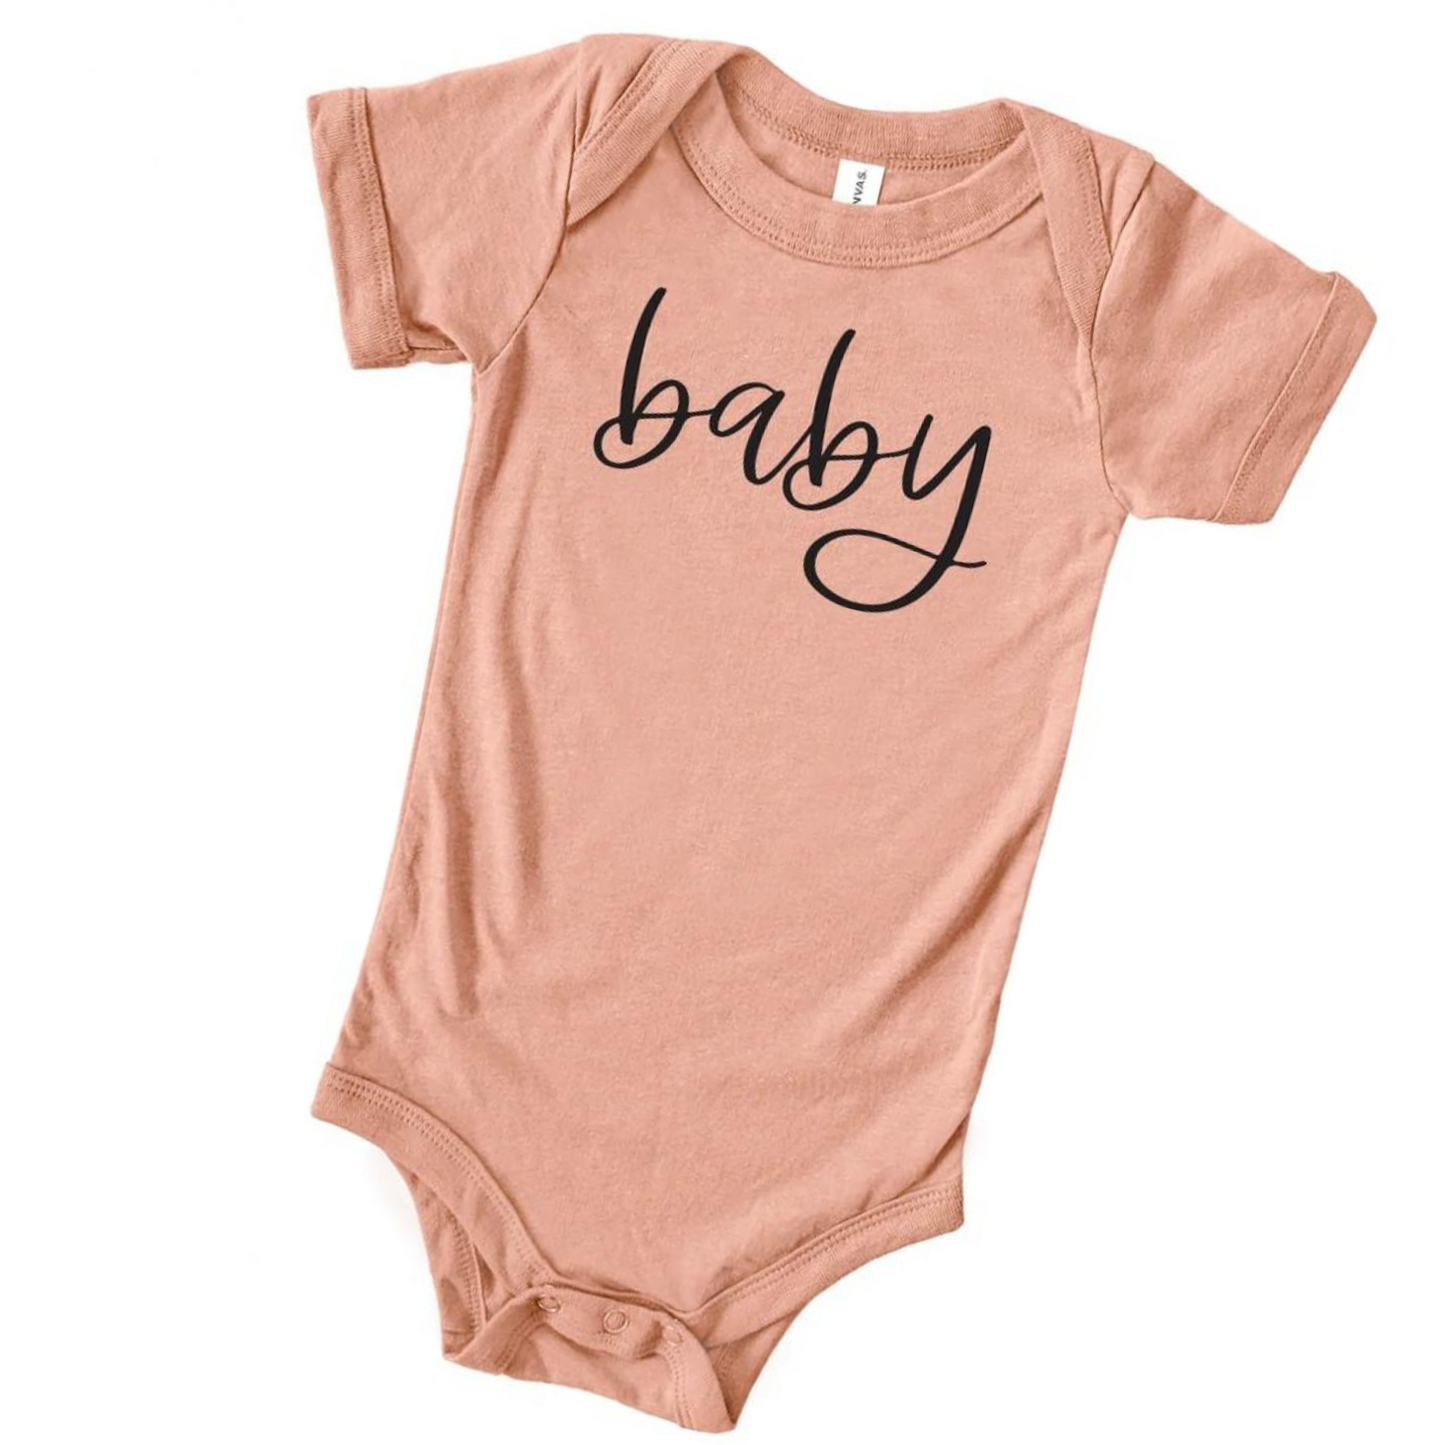 Baby Graphic Bodysuit, Peach